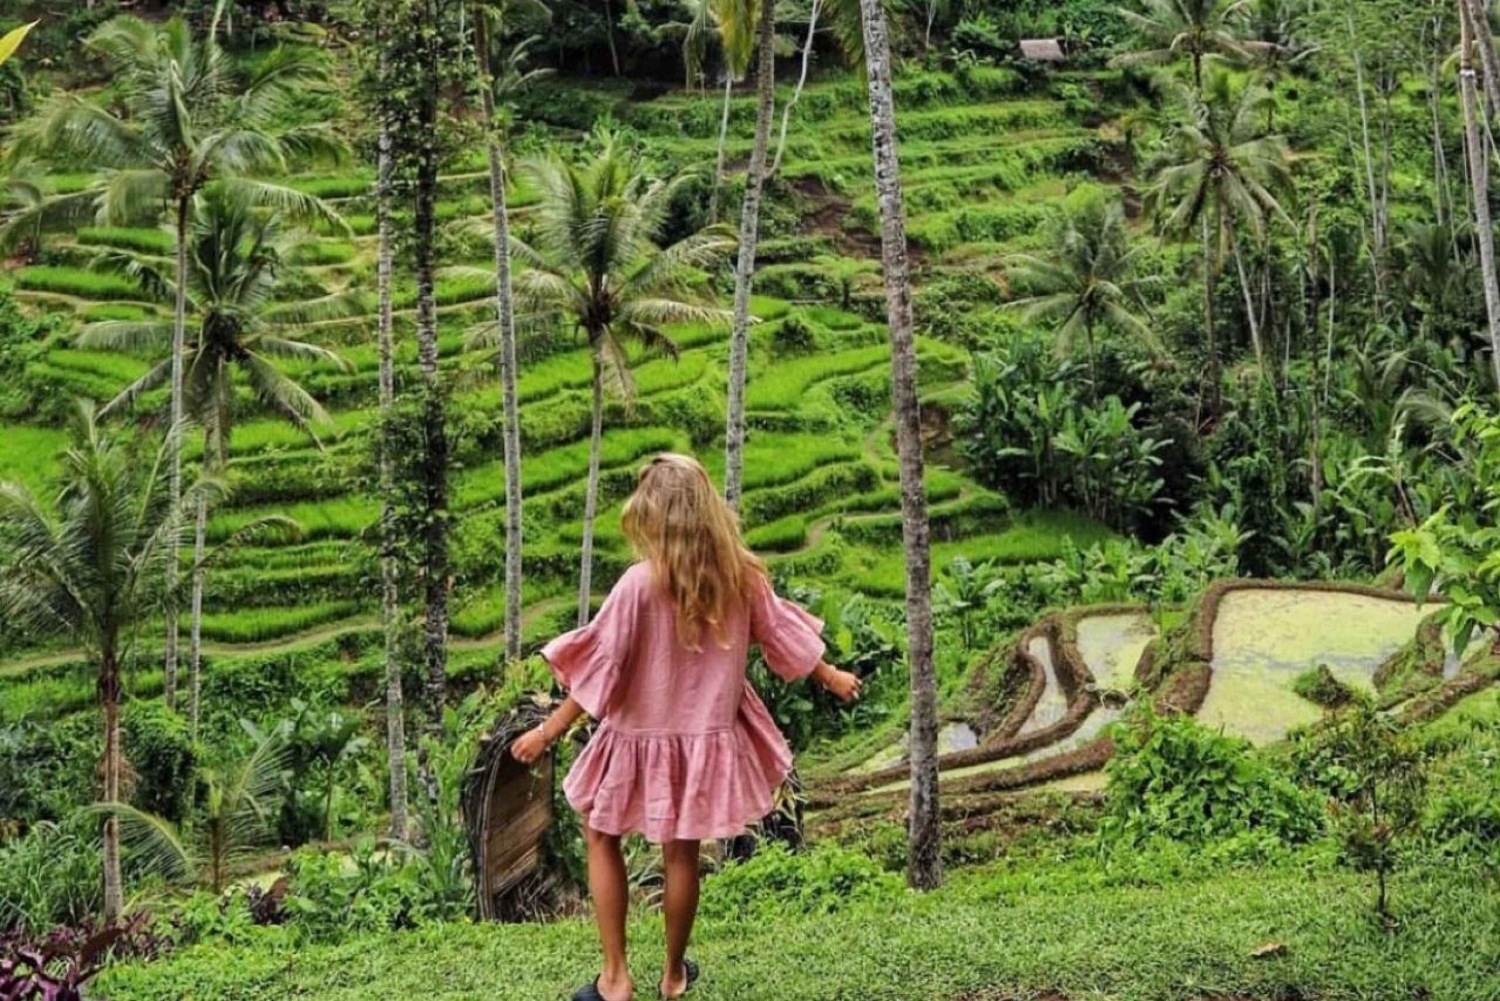 Bali: Ubud Monkey Forest, Rice Terraces, Temple, Waterfall